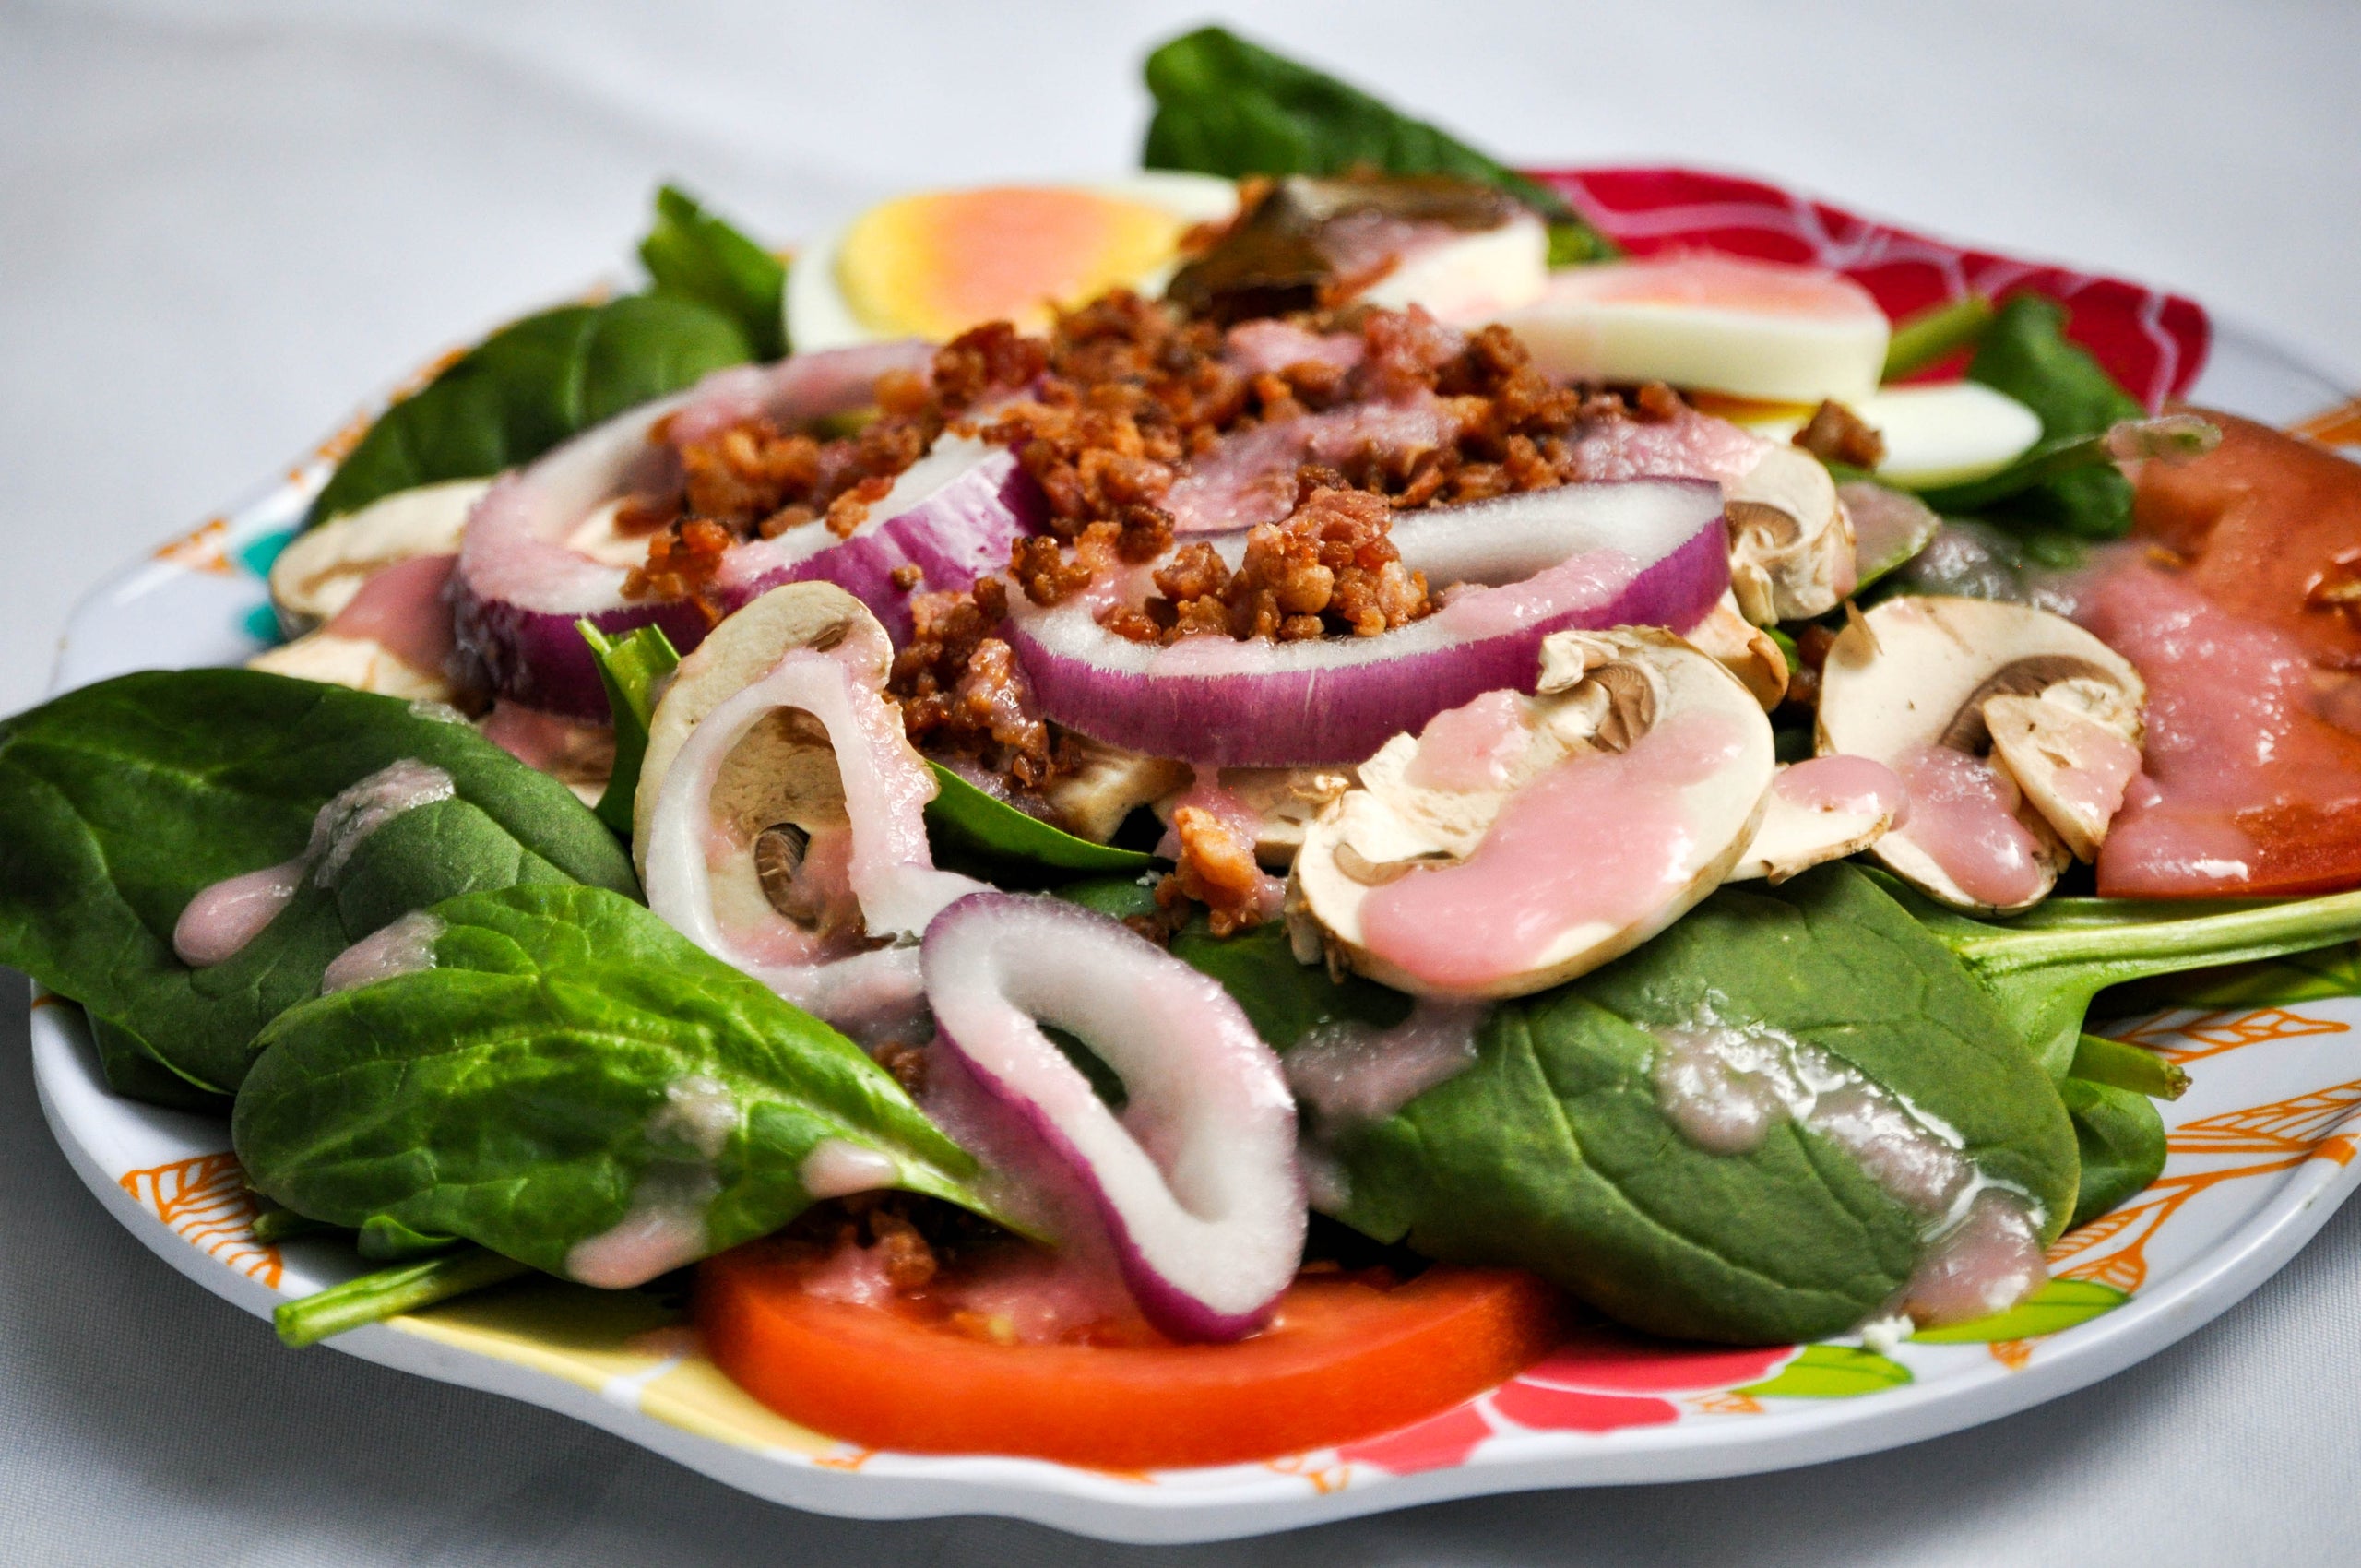 H-E-B Salad Bowl - Spinach Harvest